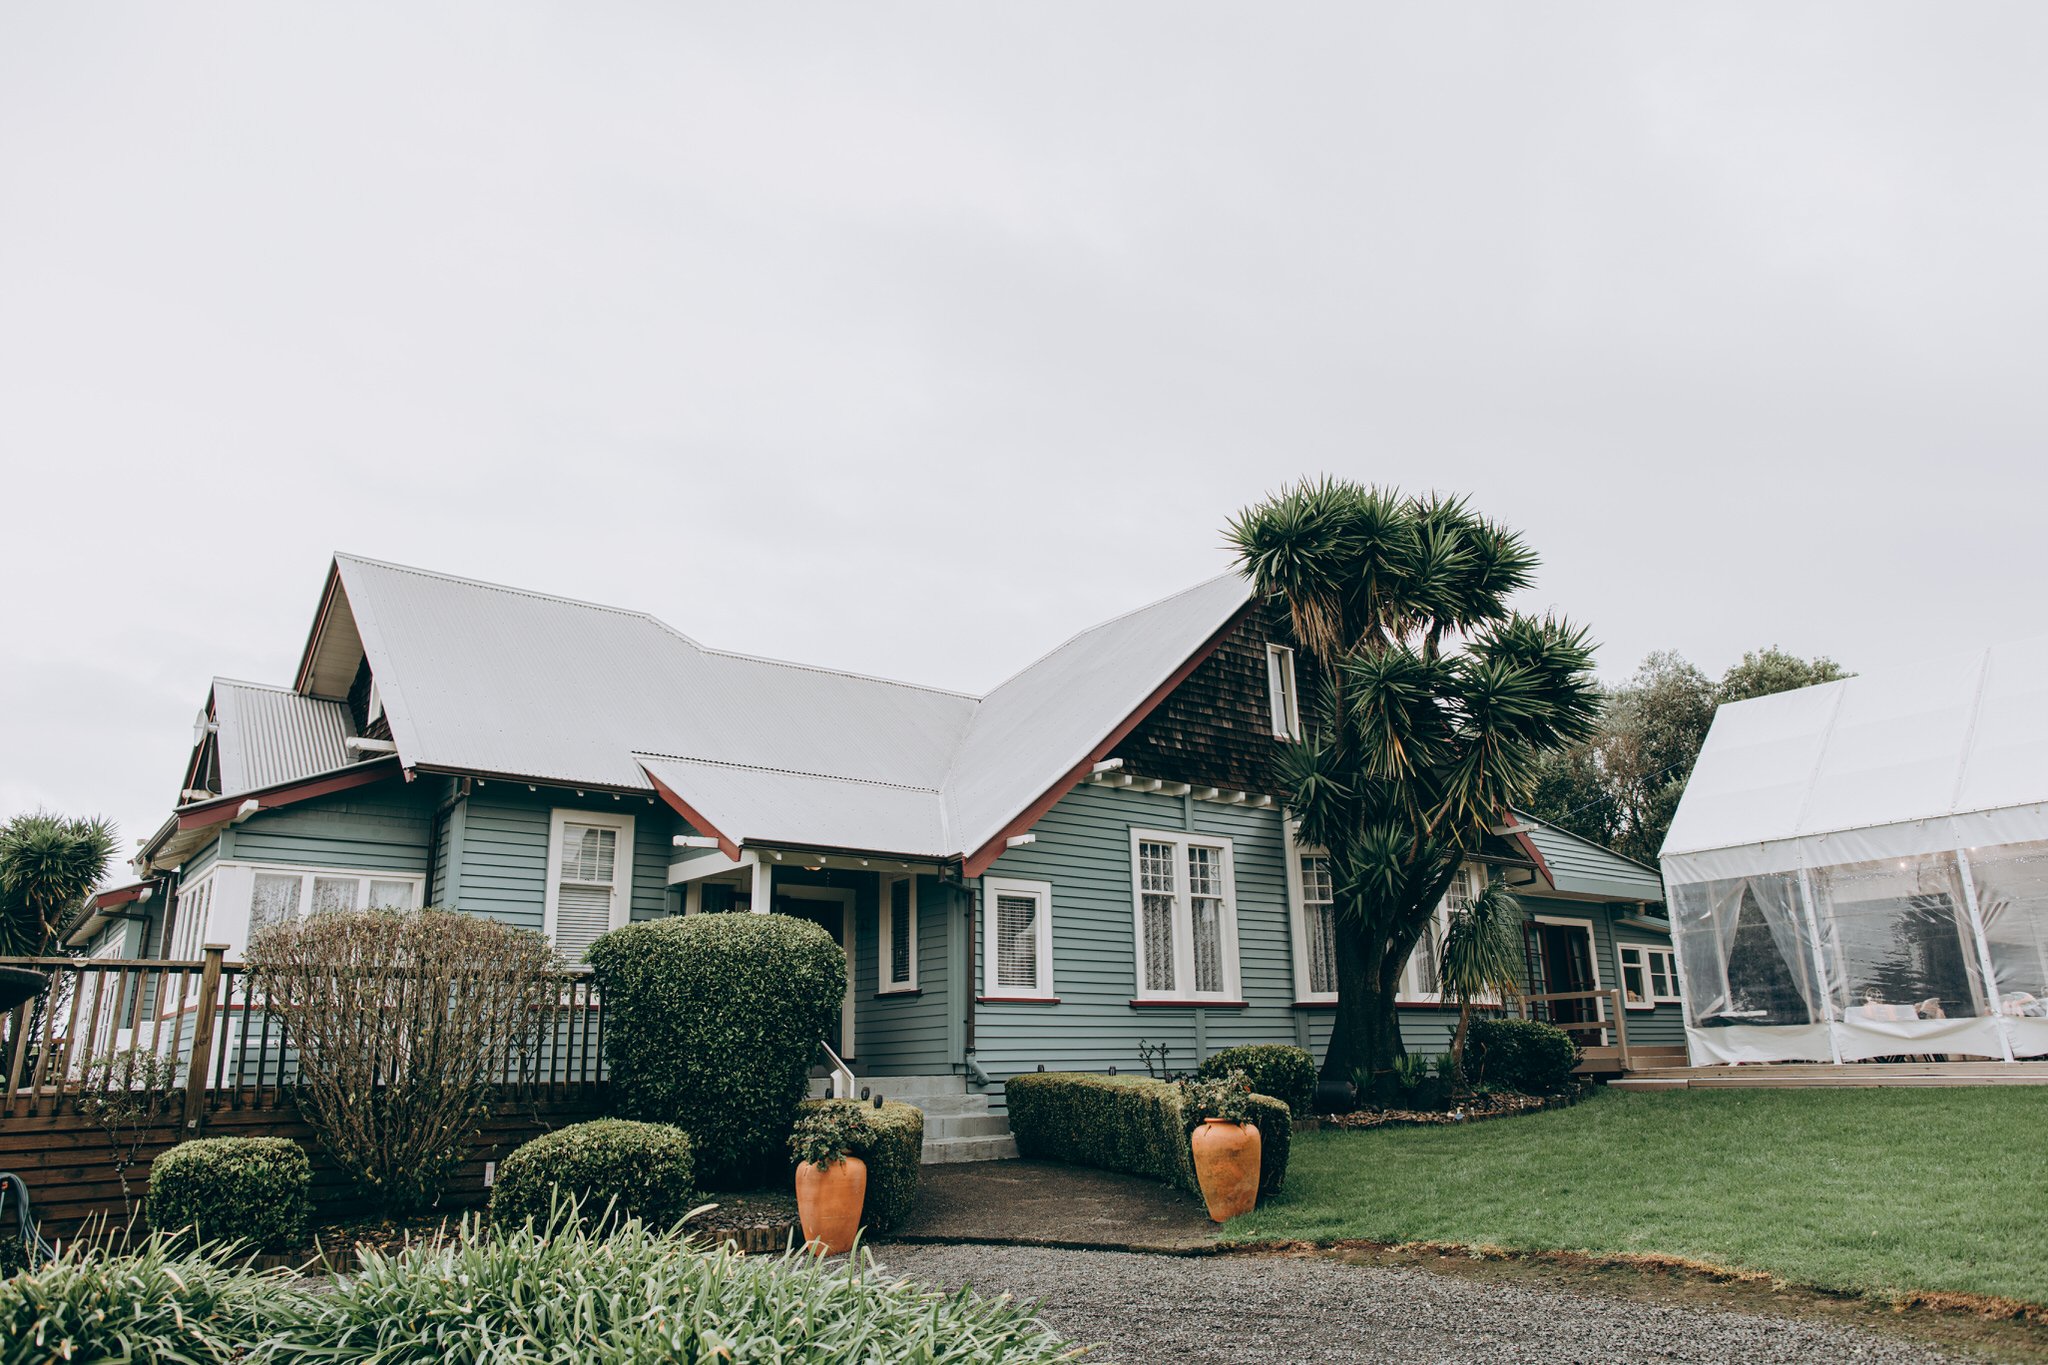 Connemara Country lodge Auckland wedding 2.jpg